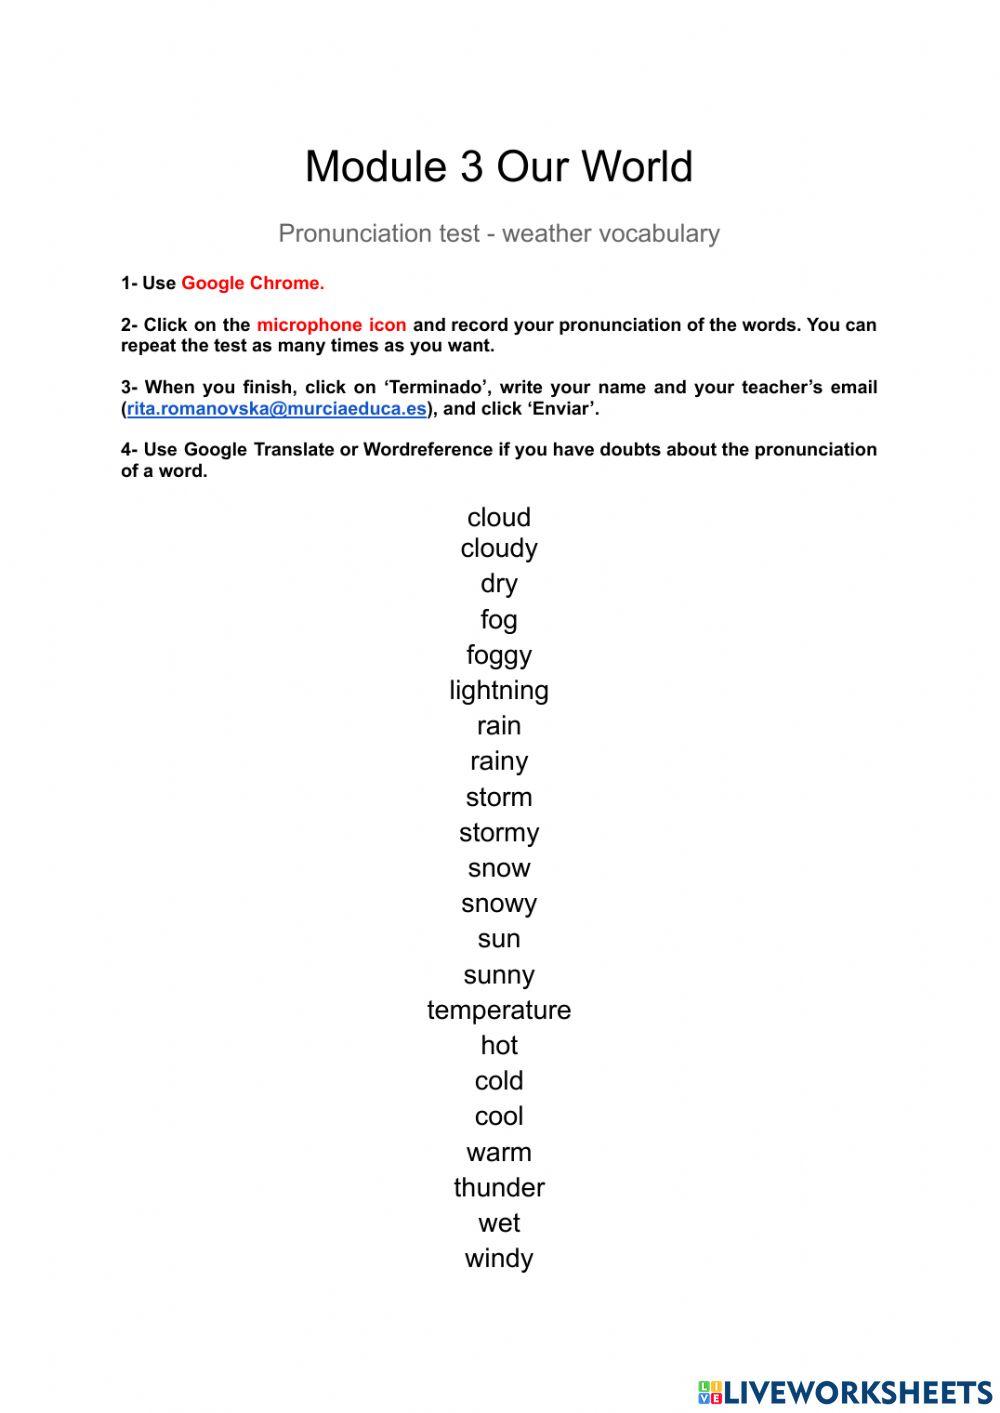 Weather words - pronunciation